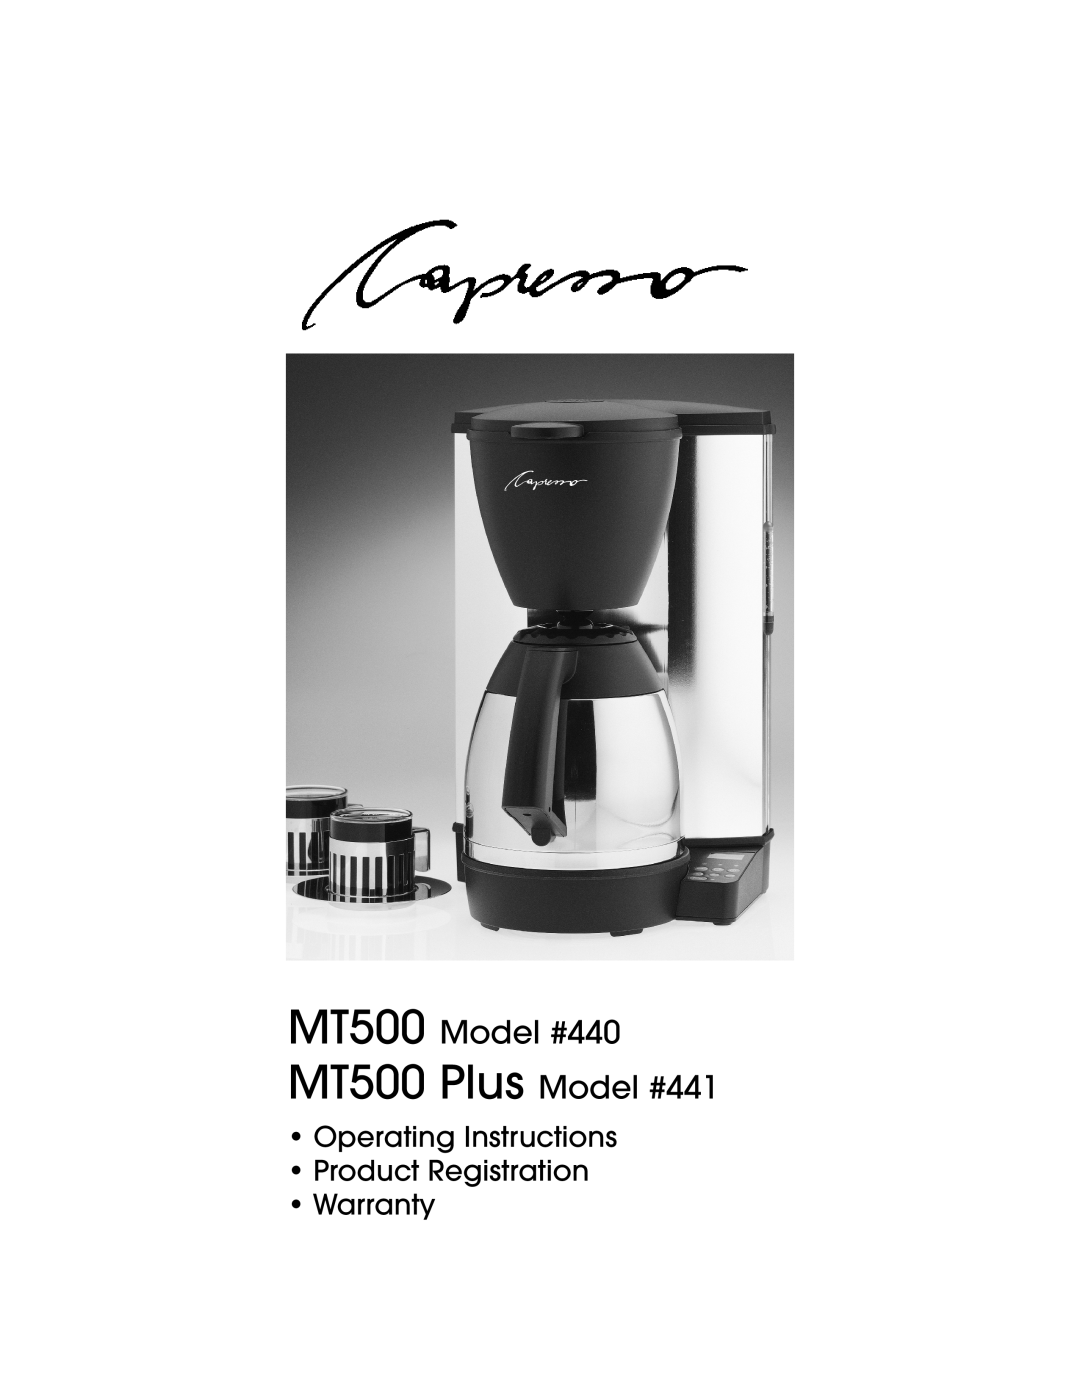 Capresso manual MT500 Plus Model #441, MT500 Model #440, Operating Instructions Product Registration Warranty 